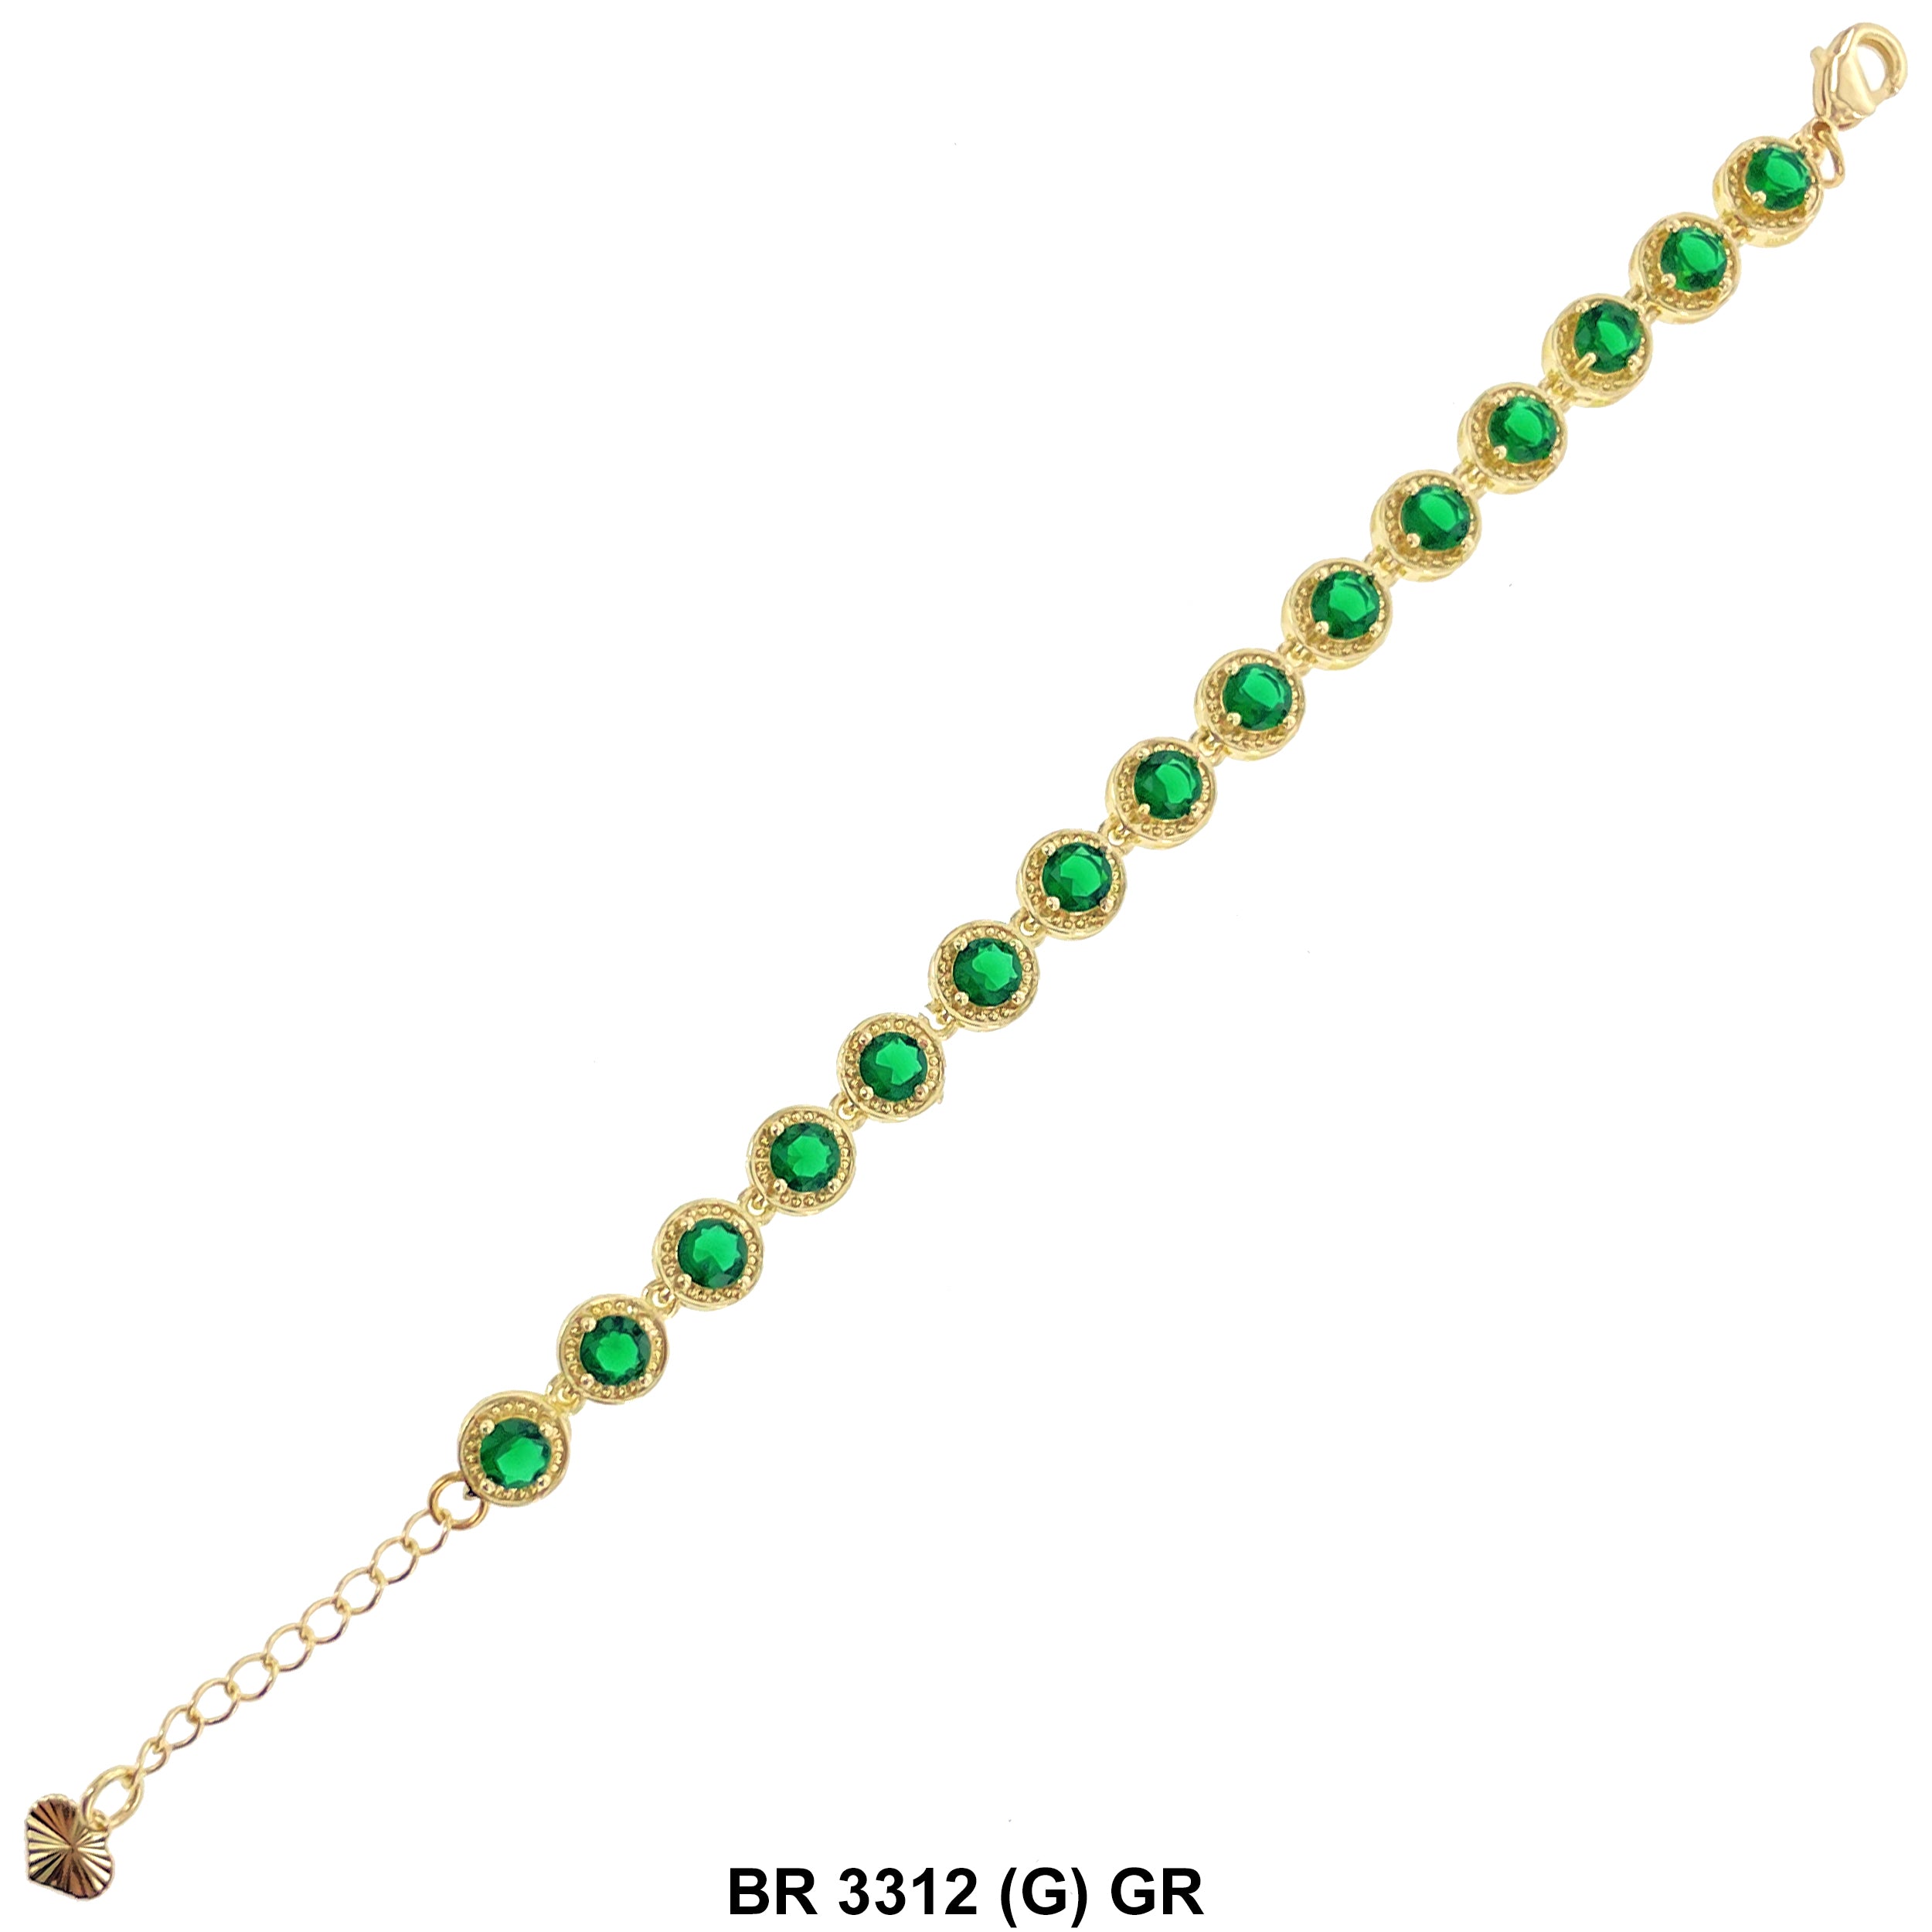 Cubic Zirconia Tennis Bracelet BR 3312 (G) GR